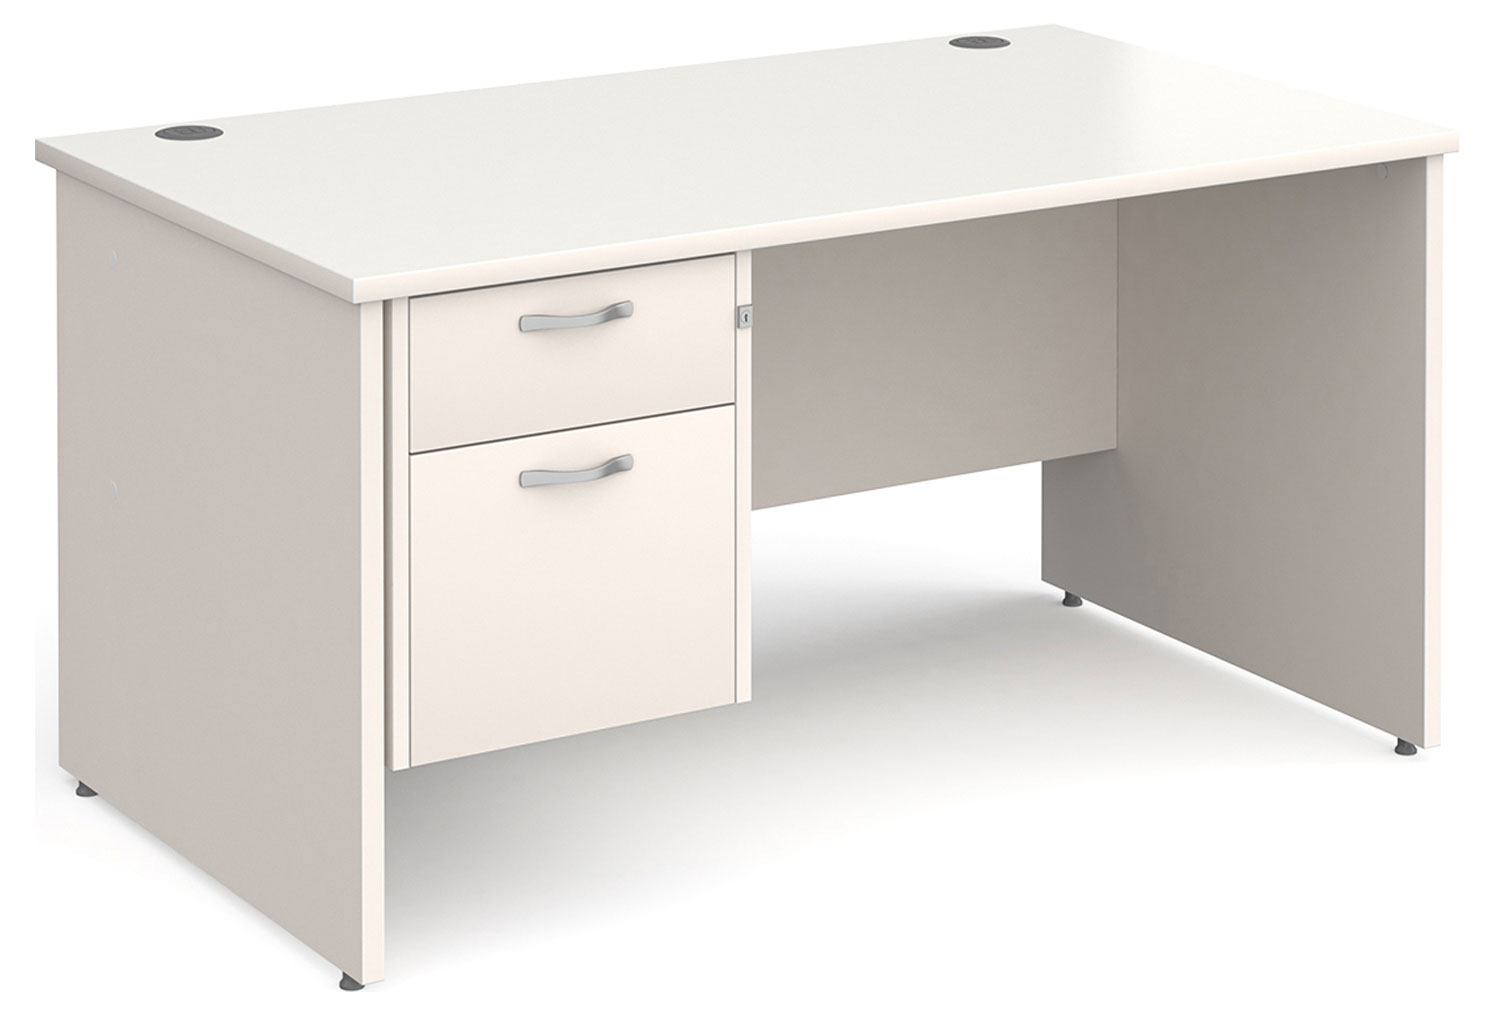 Tully Panel End Rectangular Office Desk 2 Drawers, 140wx80dx73h (cm), White